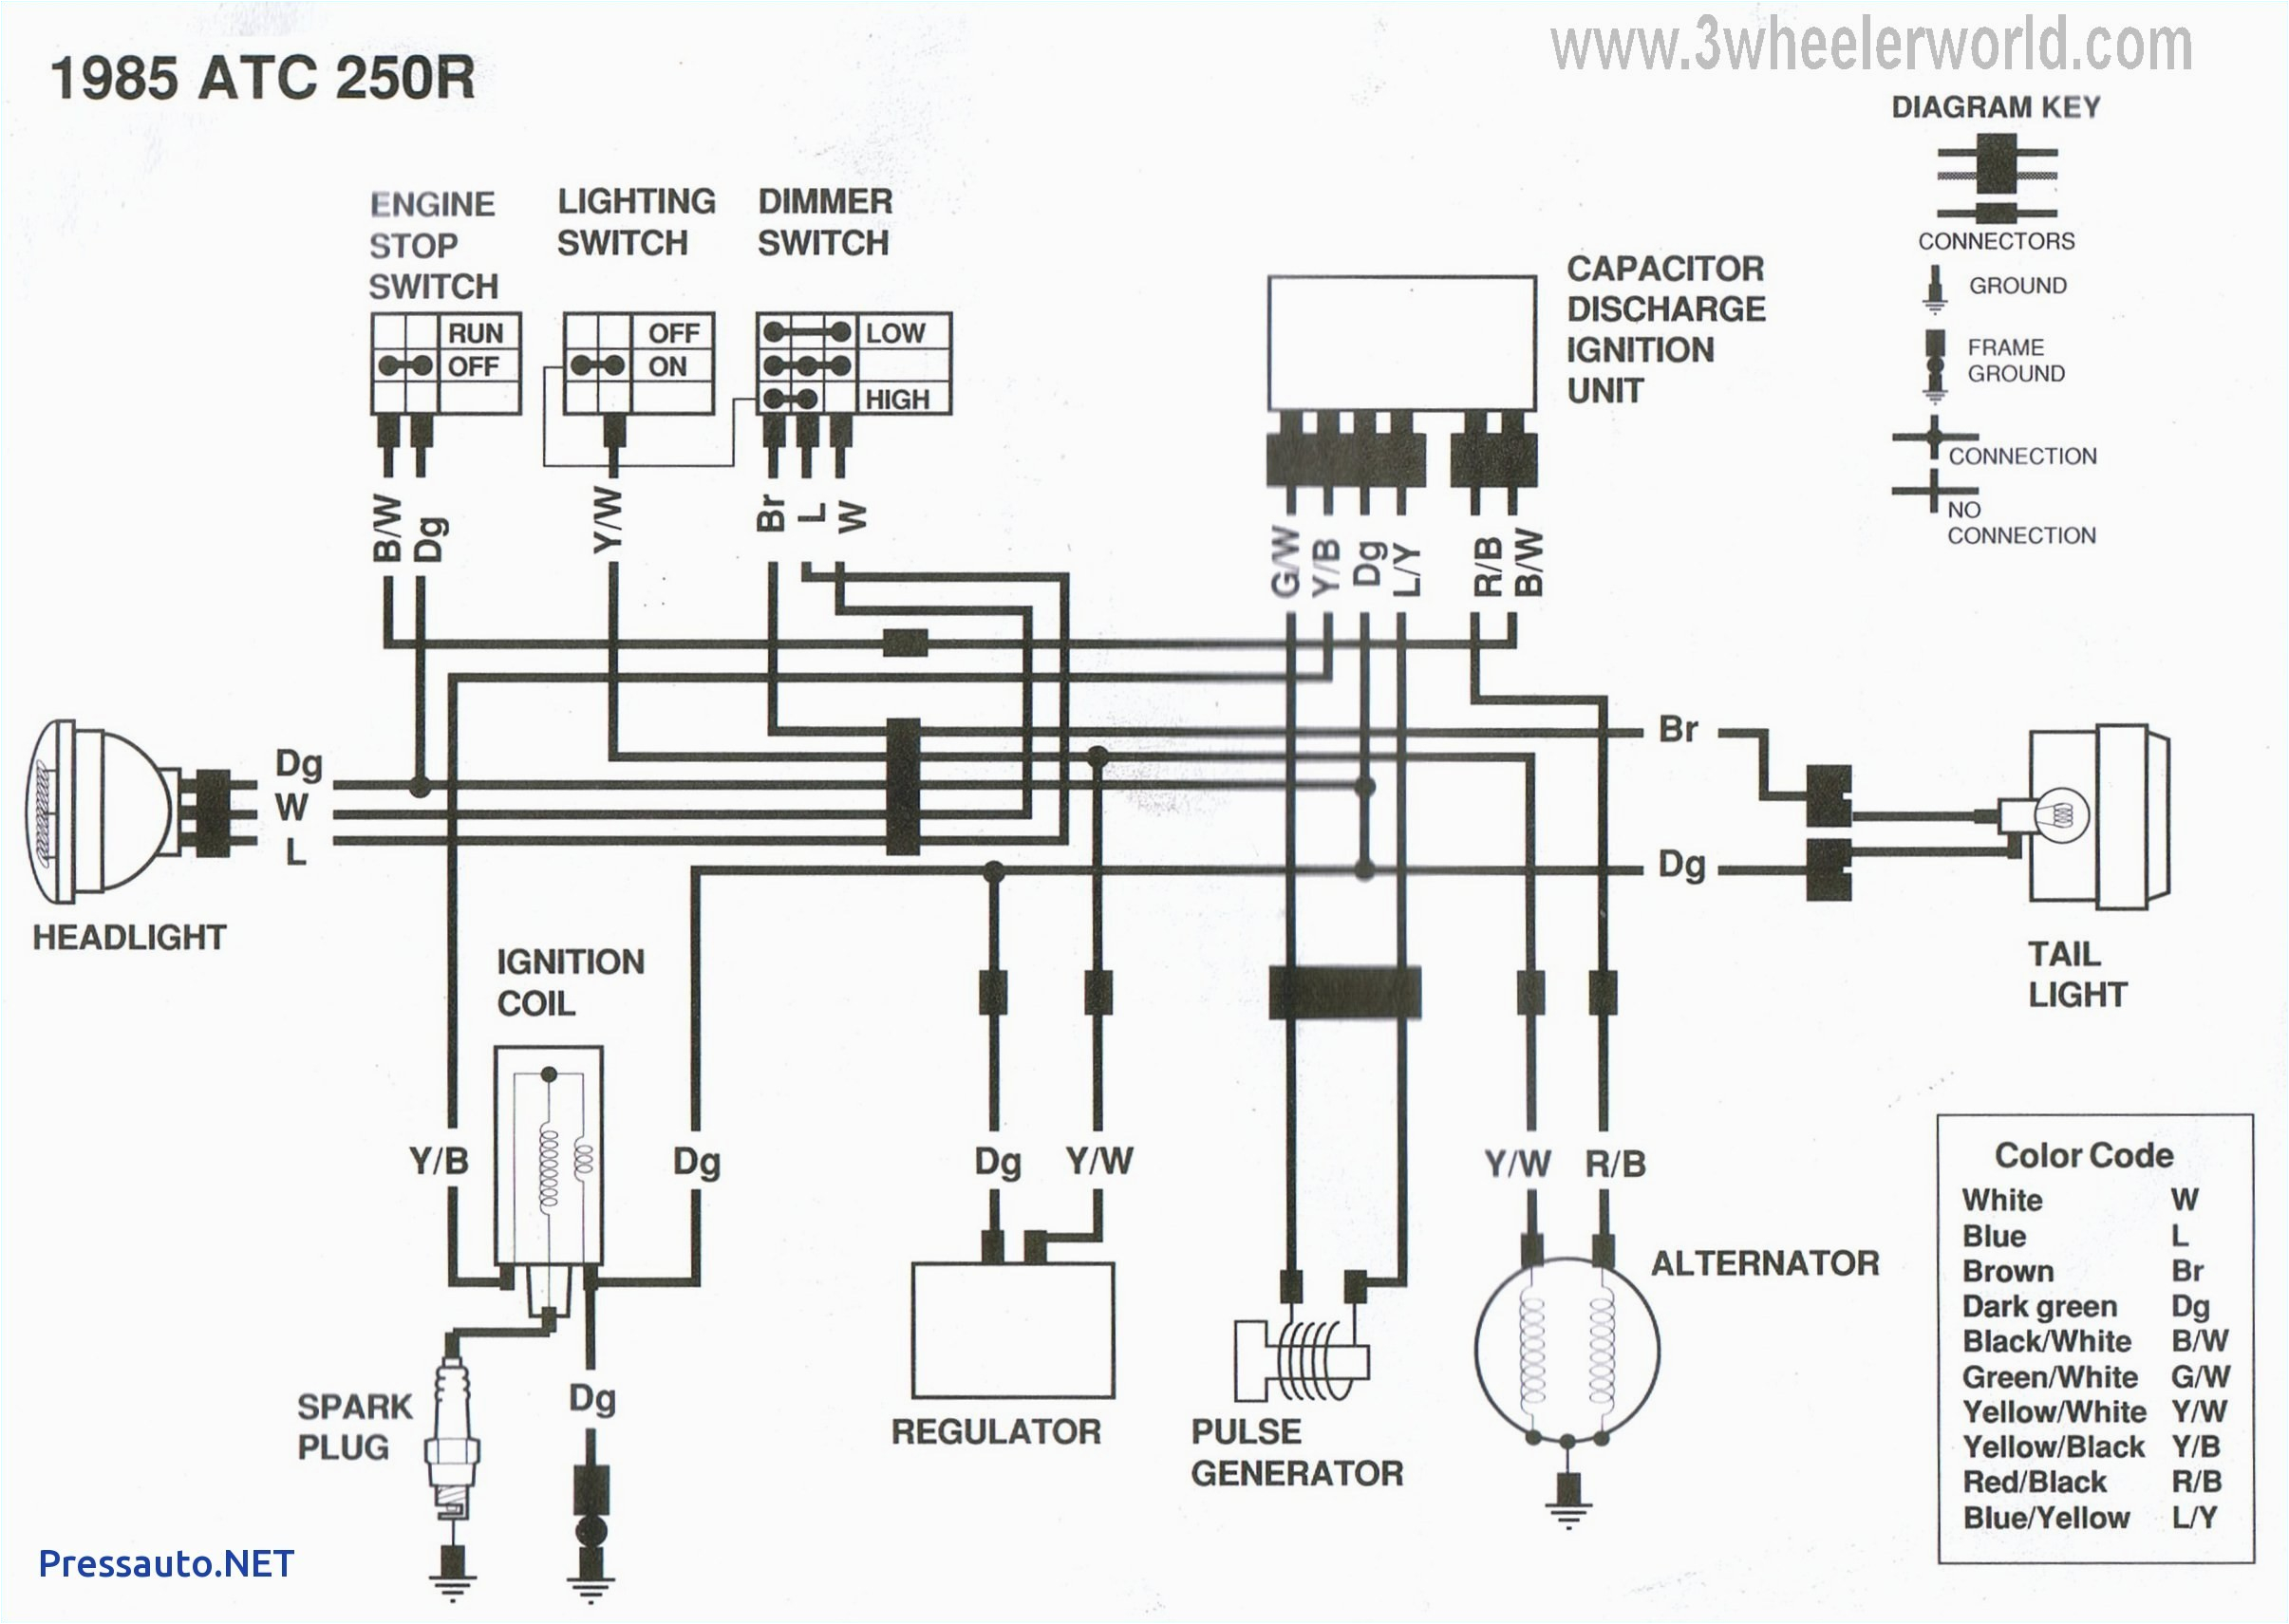 1981 yamaha y wiring diagrams wiring diagrams 1981 yamaha y wiring diagrams